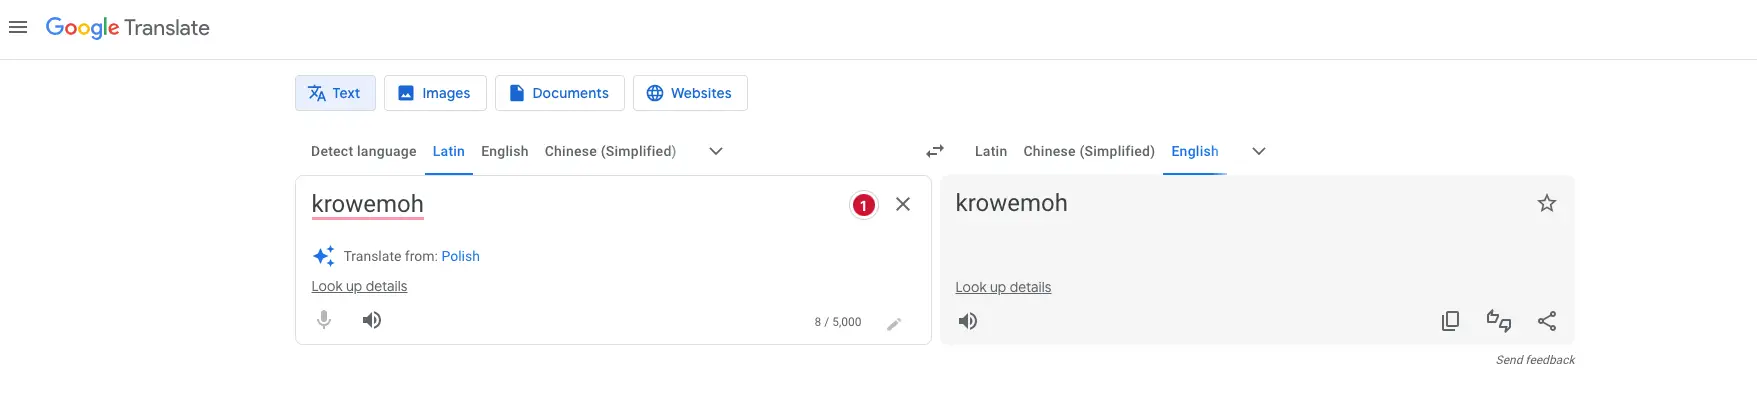 Krowemoh Google Translate